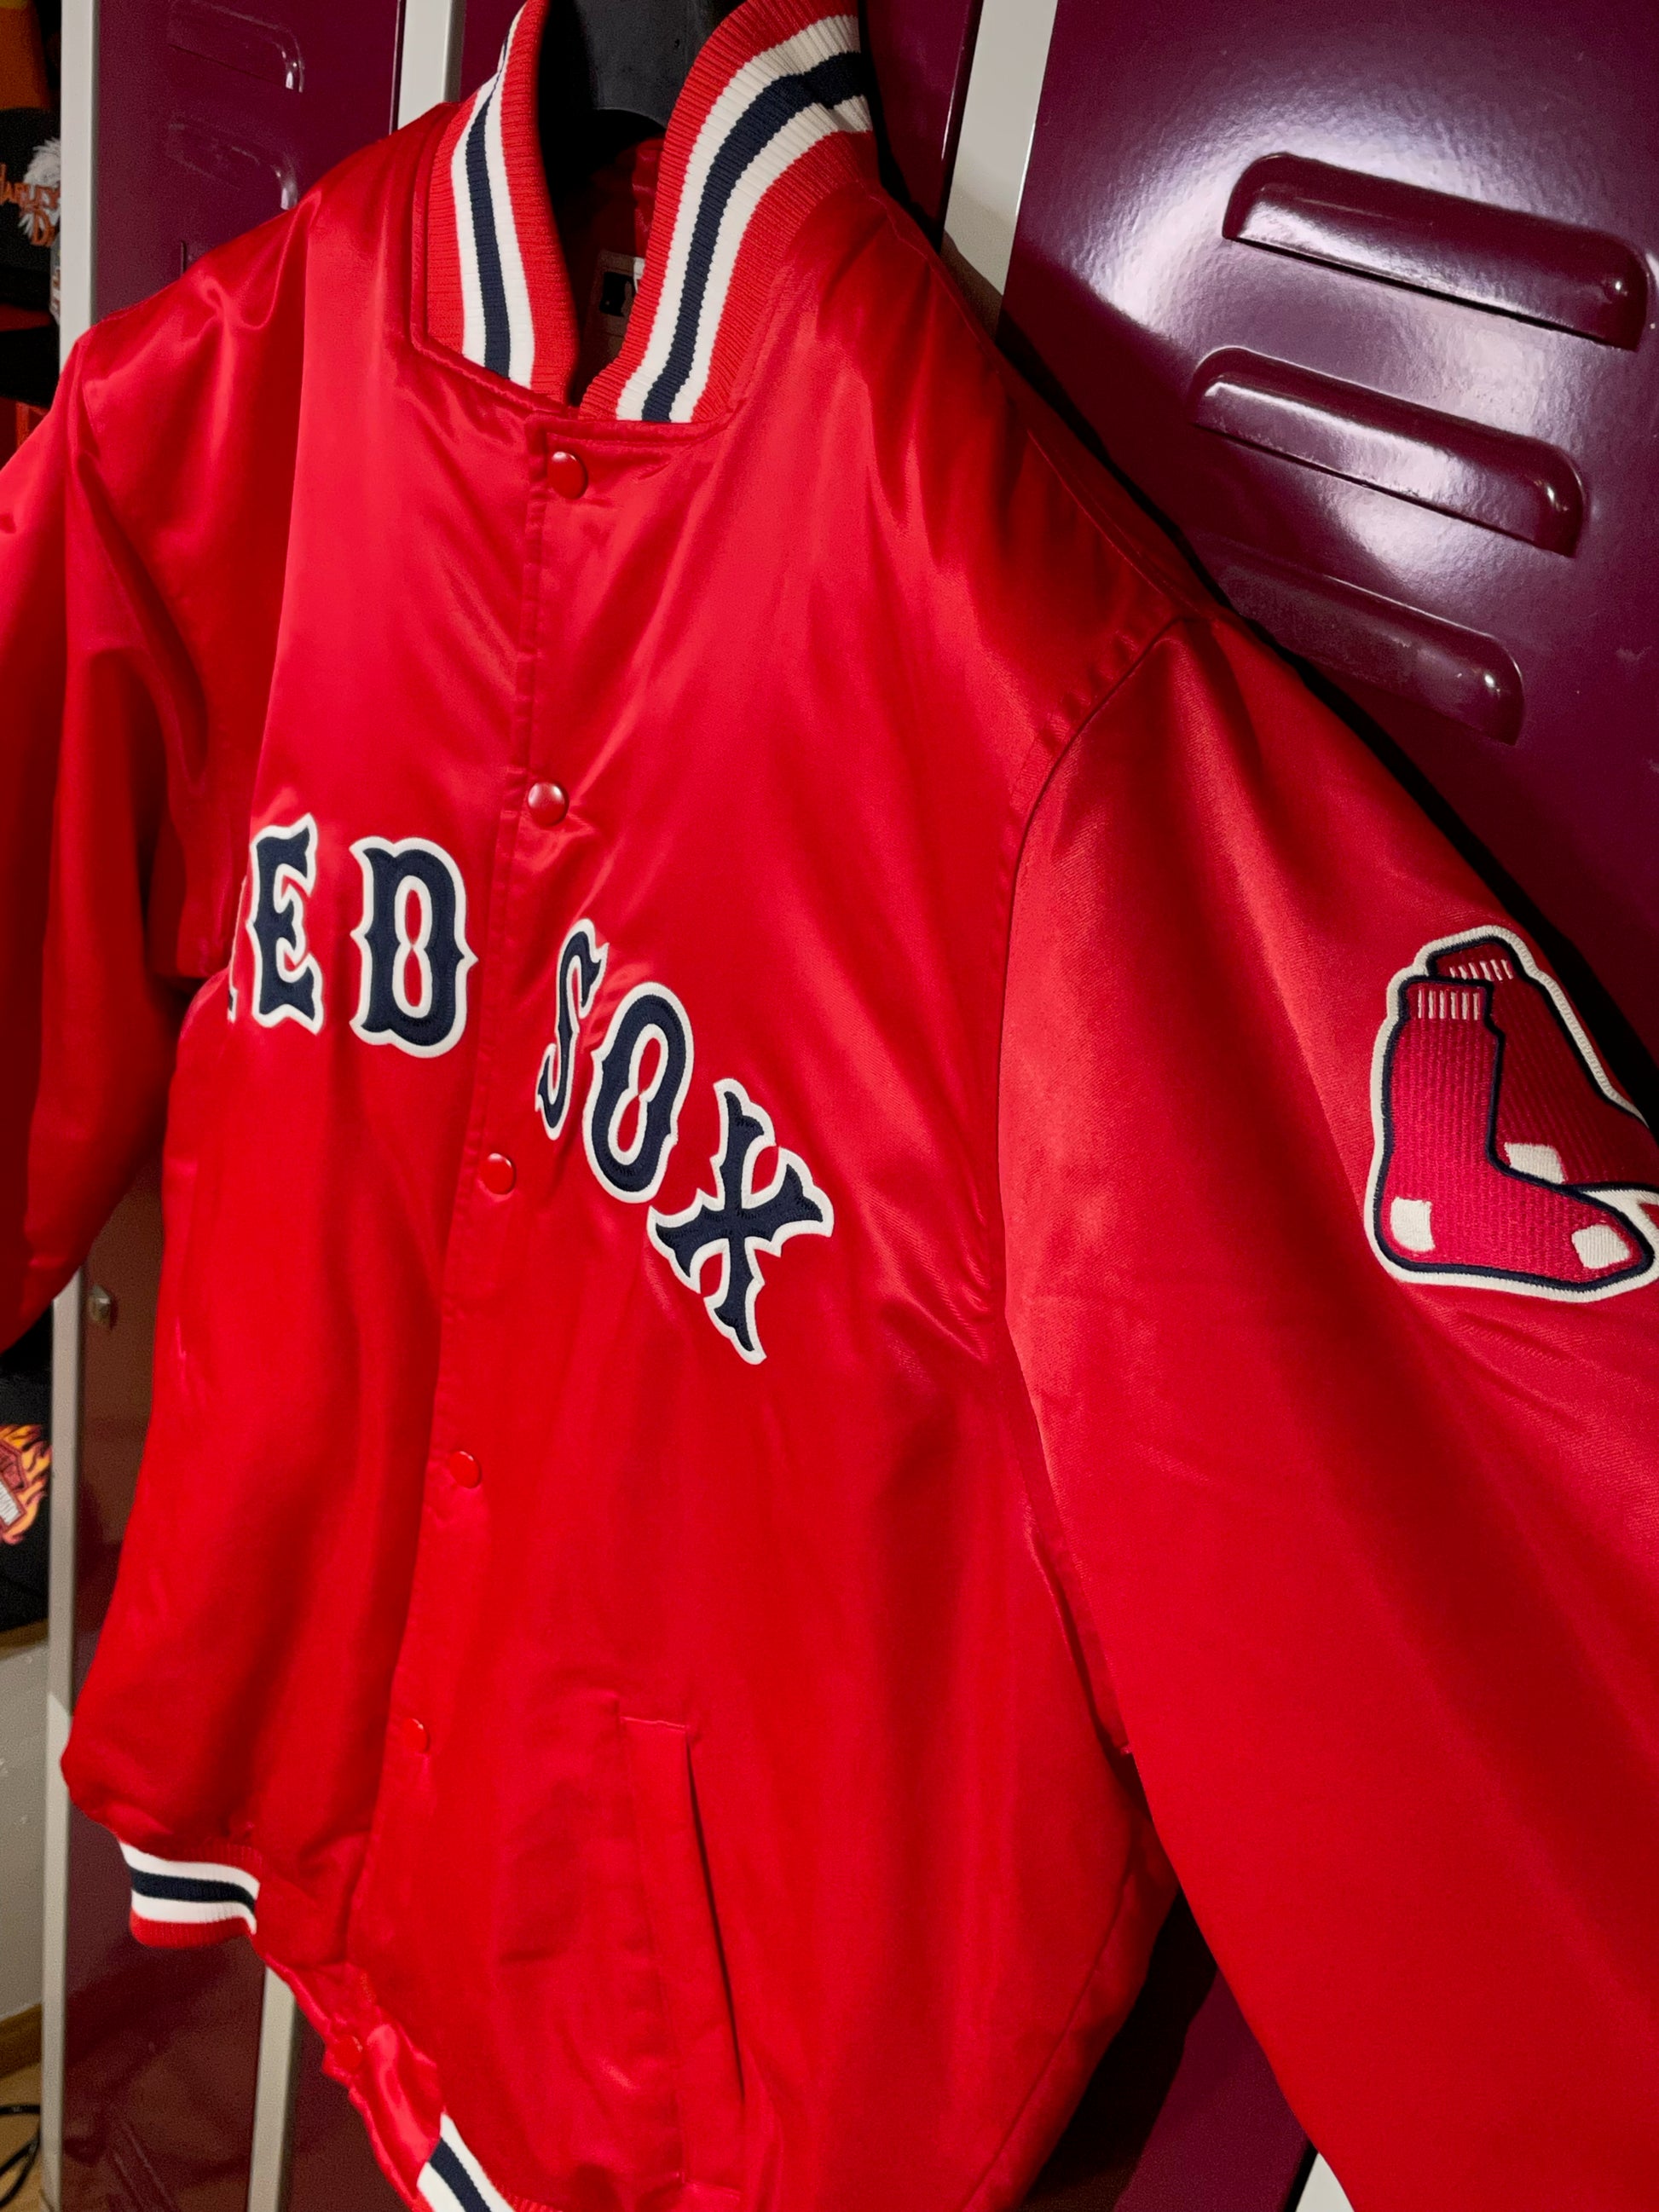 Maker of Jacket MLB Boston Red Sox Vintage Satin Baseball